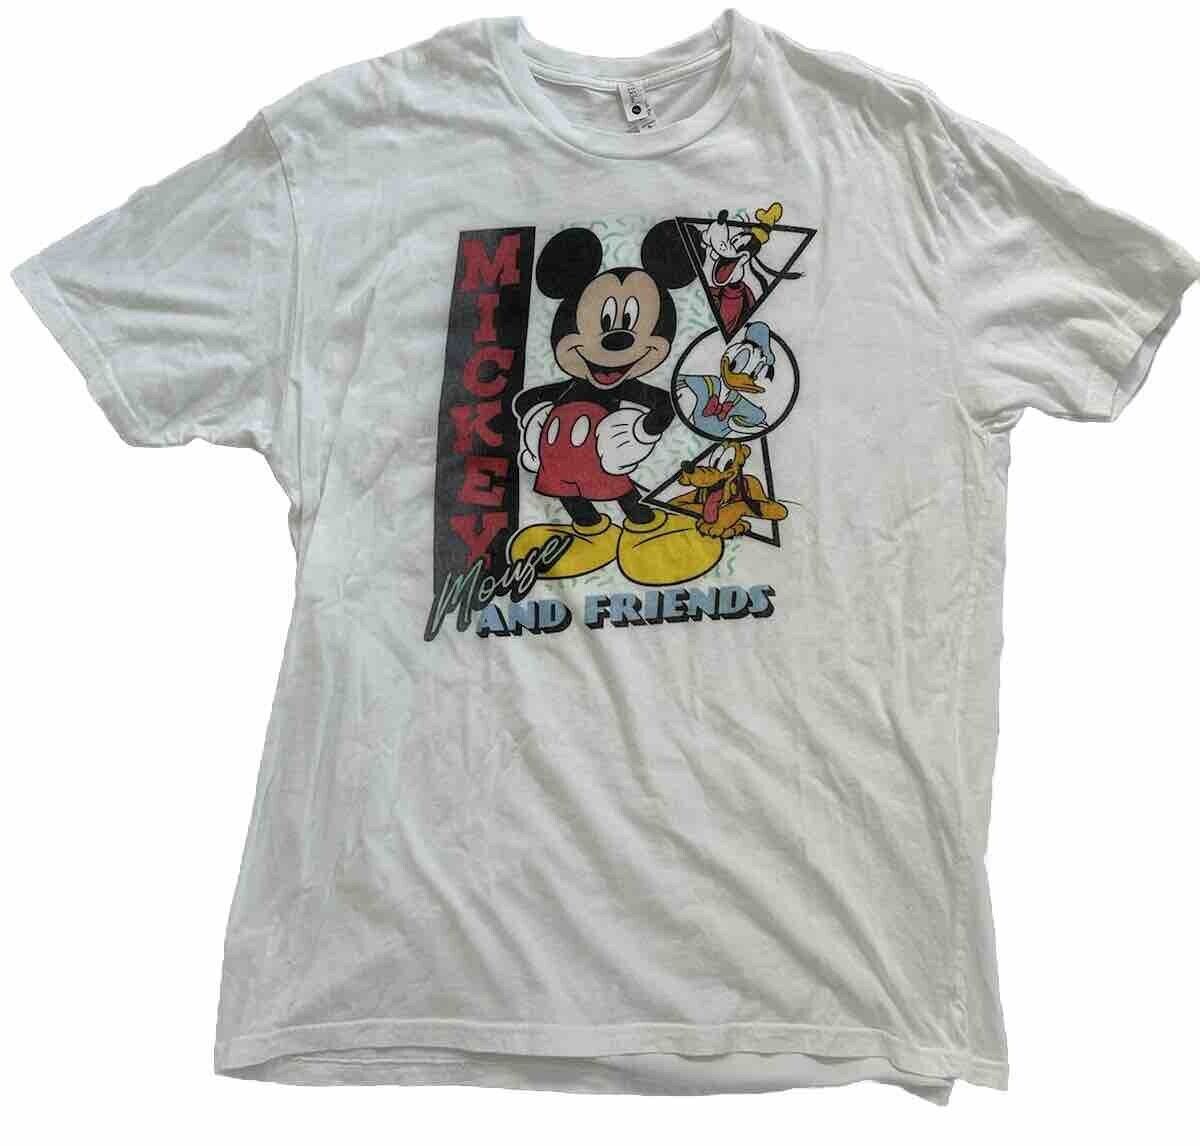 GRAPHIC TSHIRT 90s DISNEY Mickey Mouse & Friends White XL Goofy Pluto Donald VTG